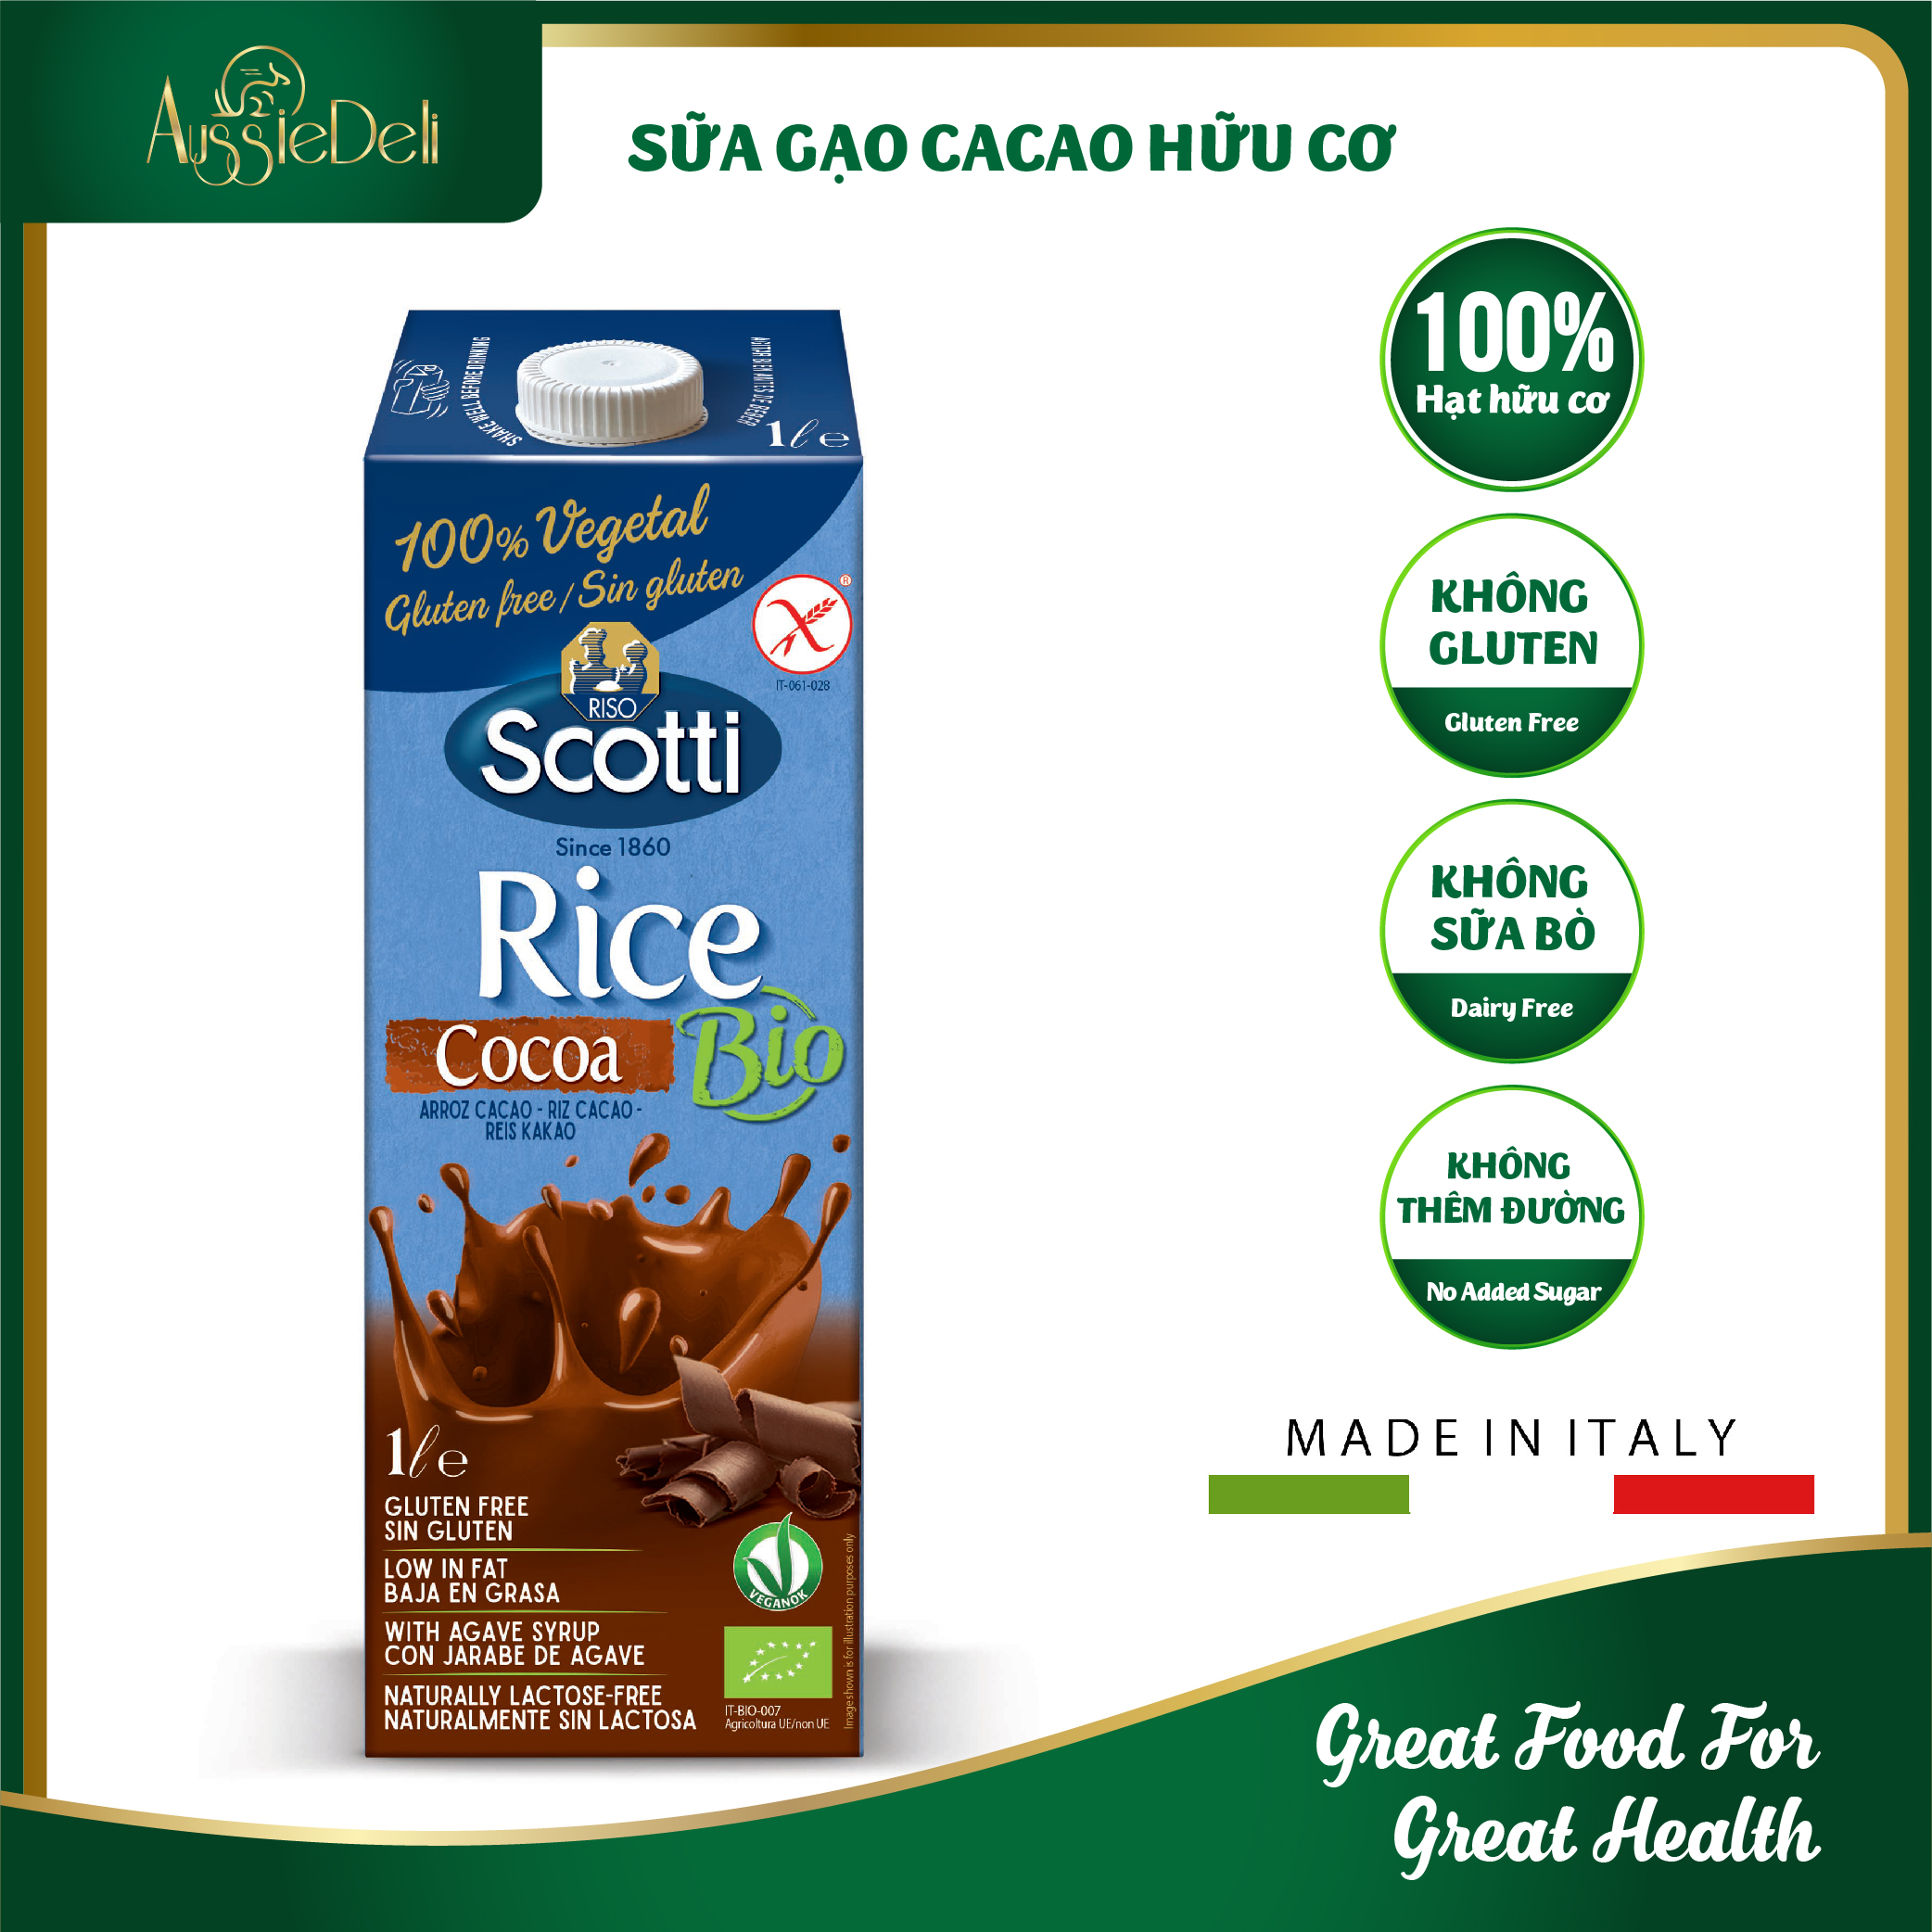 Sữa Gạo Cacao Hữu Cơ Riso Scotti - ORGANIC Rice Cocoa Drink hộp 1L